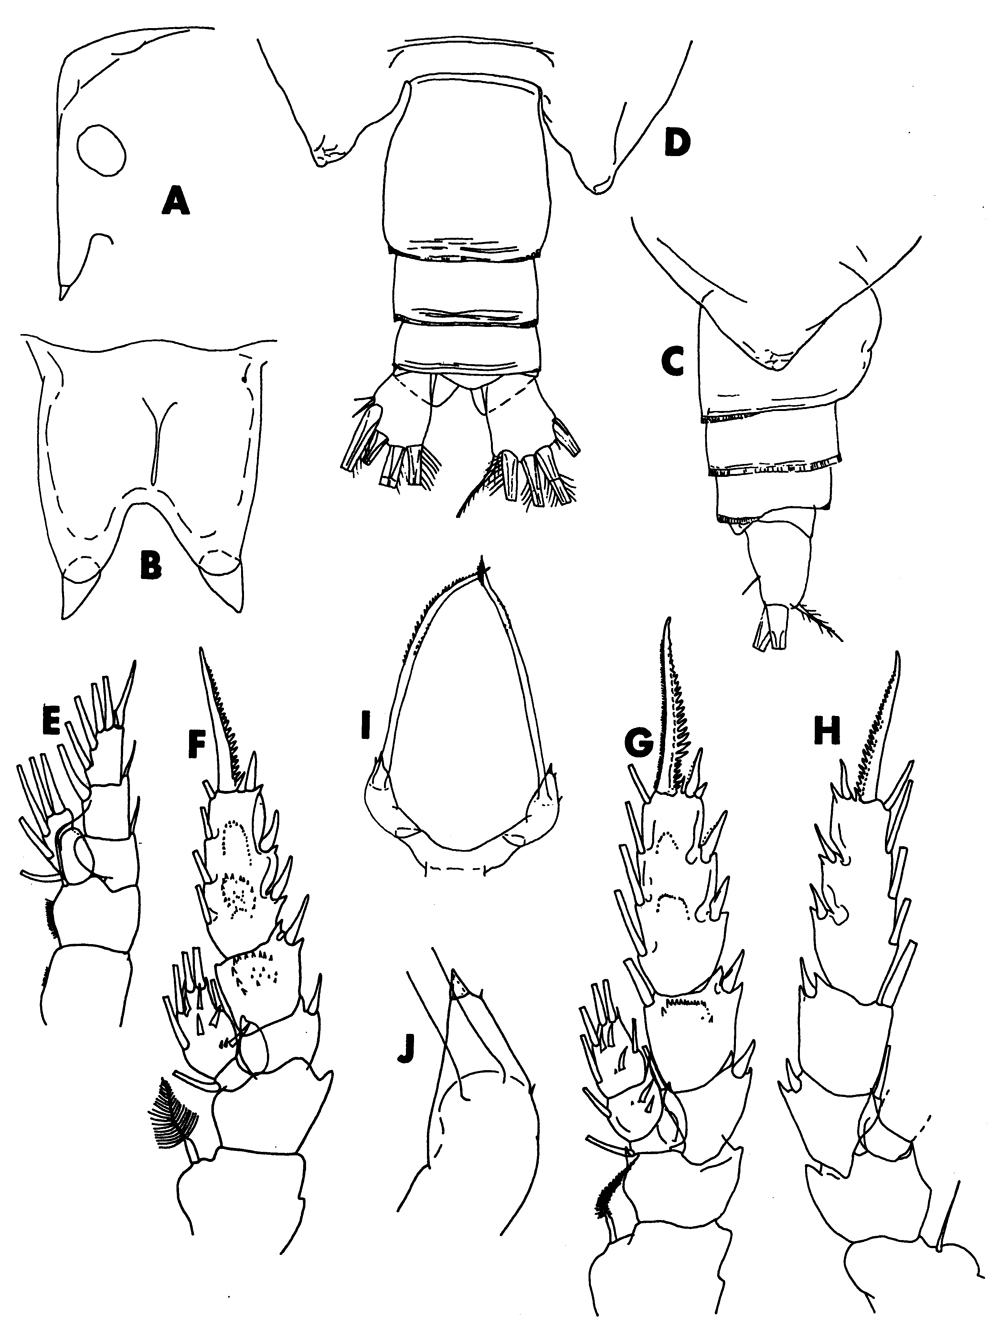 Species Scottocalanus thori - Plate 10 of morphological figures